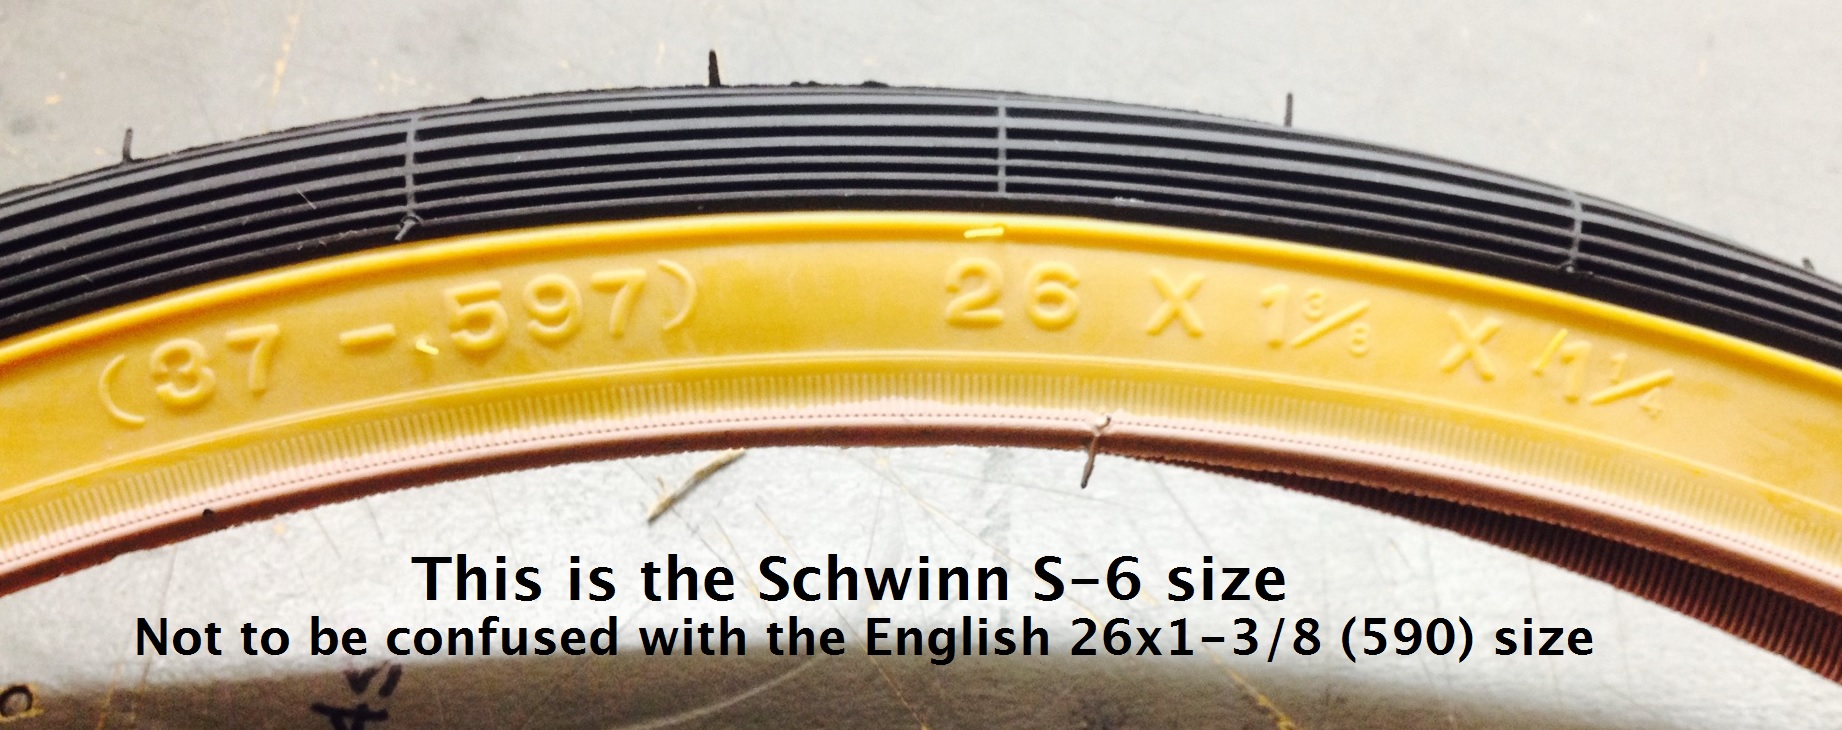 schwinn 700c tires